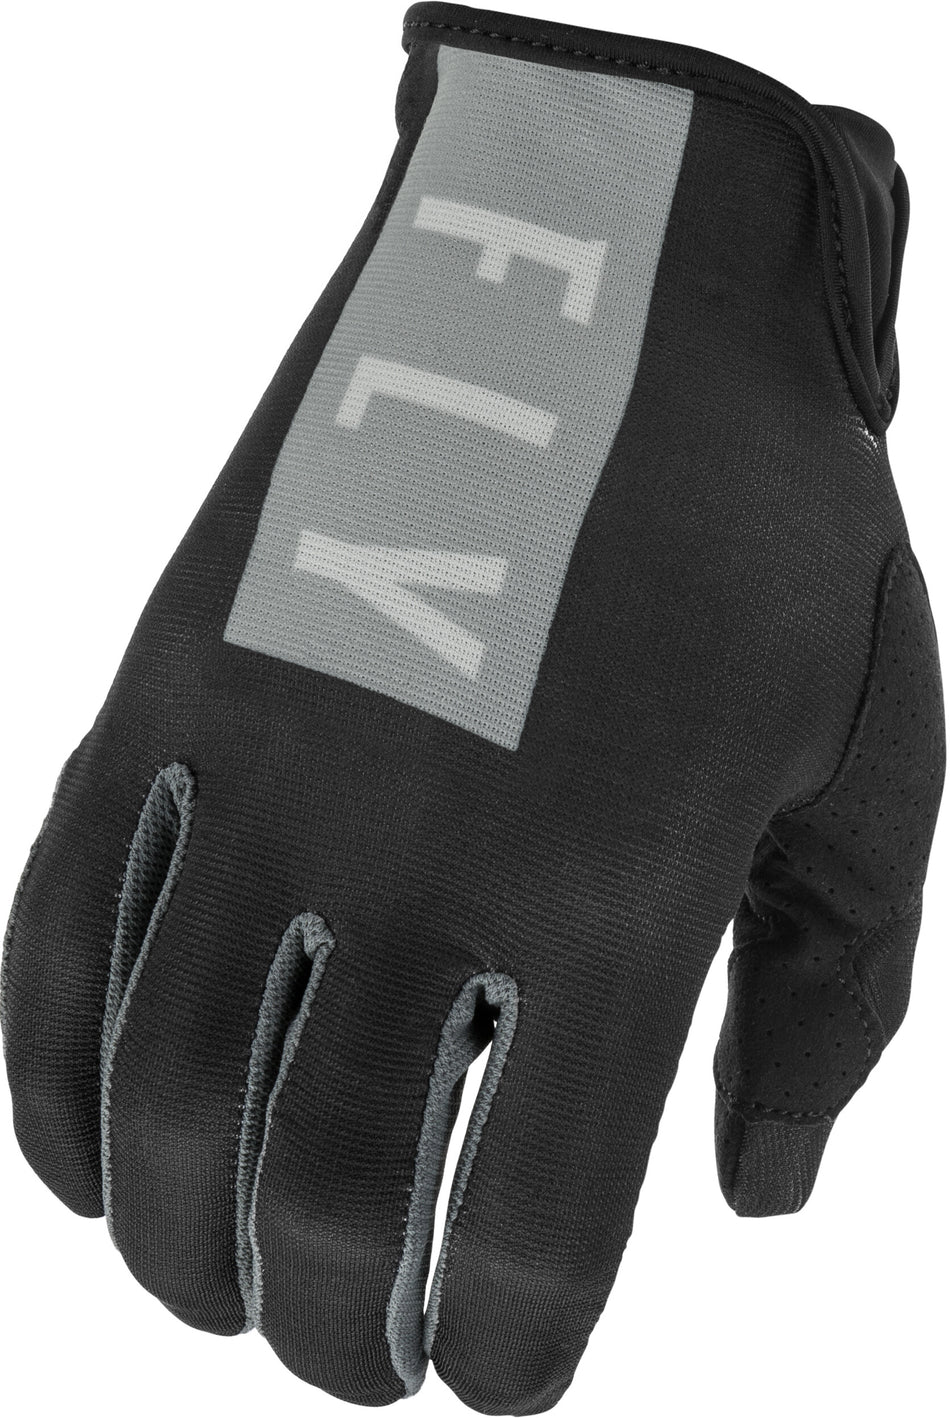 FLY RACING Women's Lite Gloves Black/Grey Sz 05 374-61005